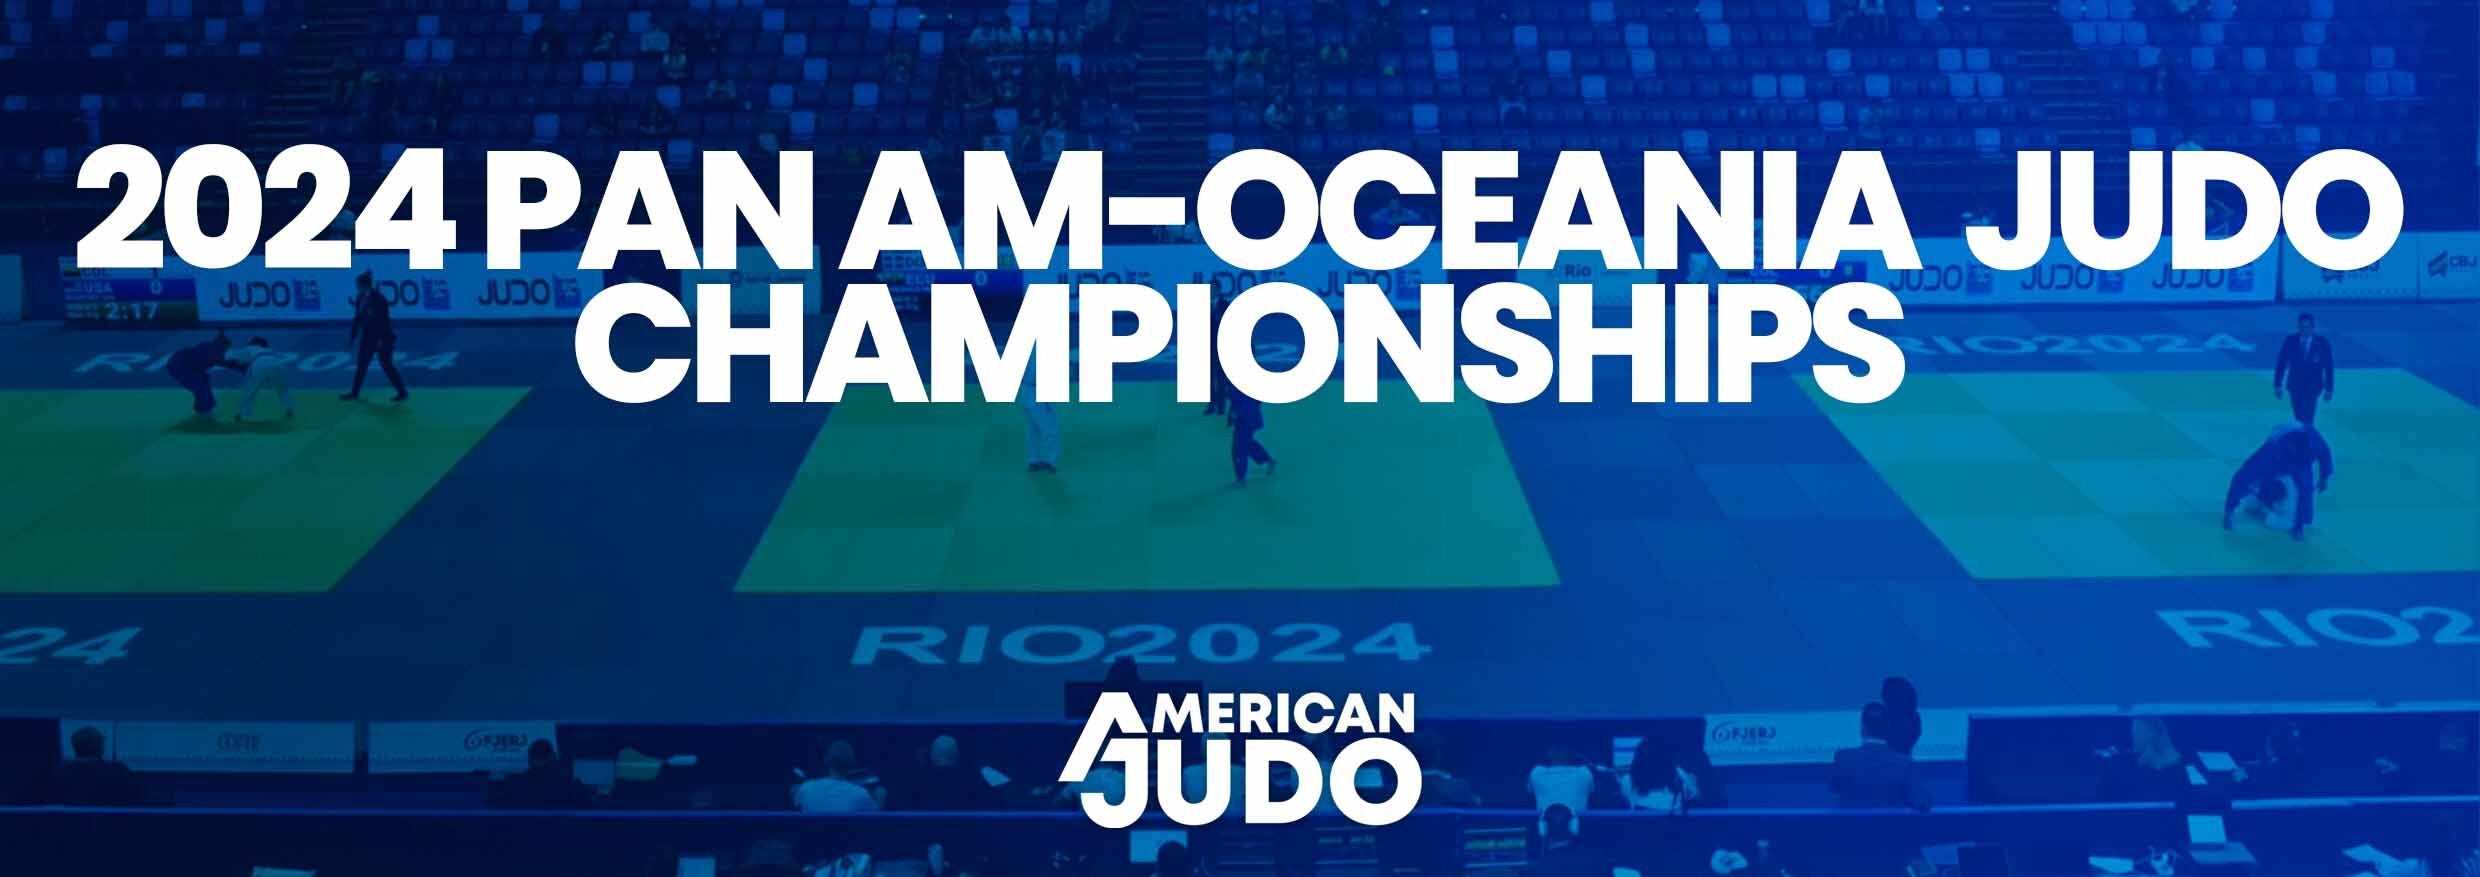 Pan Am-Oceania Championships